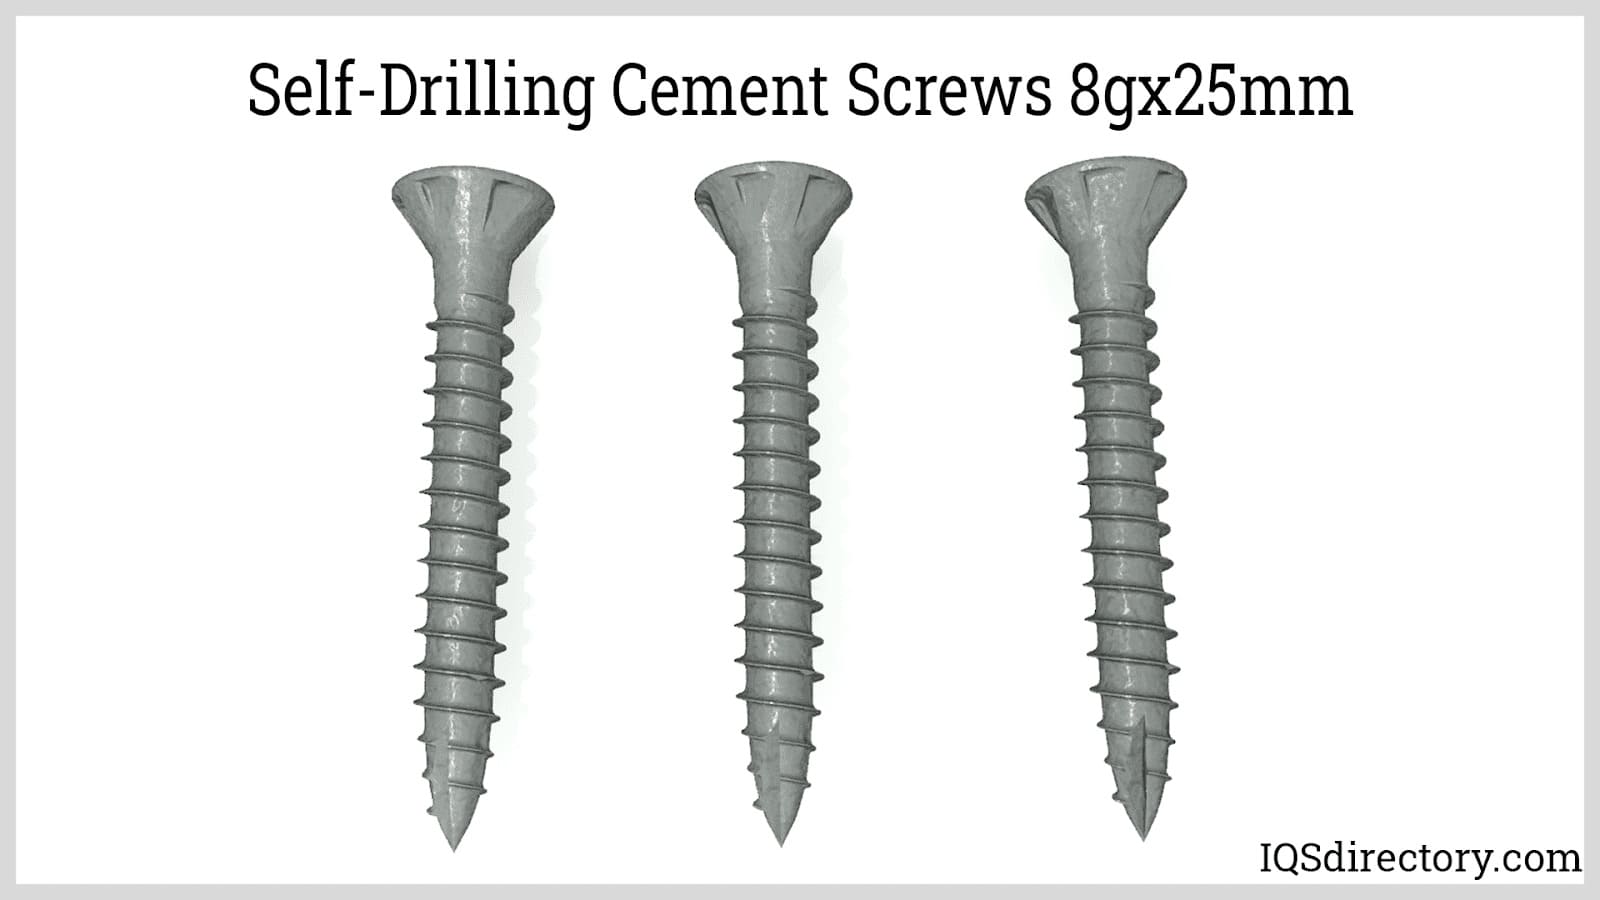 Self-Drilling Cement Screws 8gx25mm